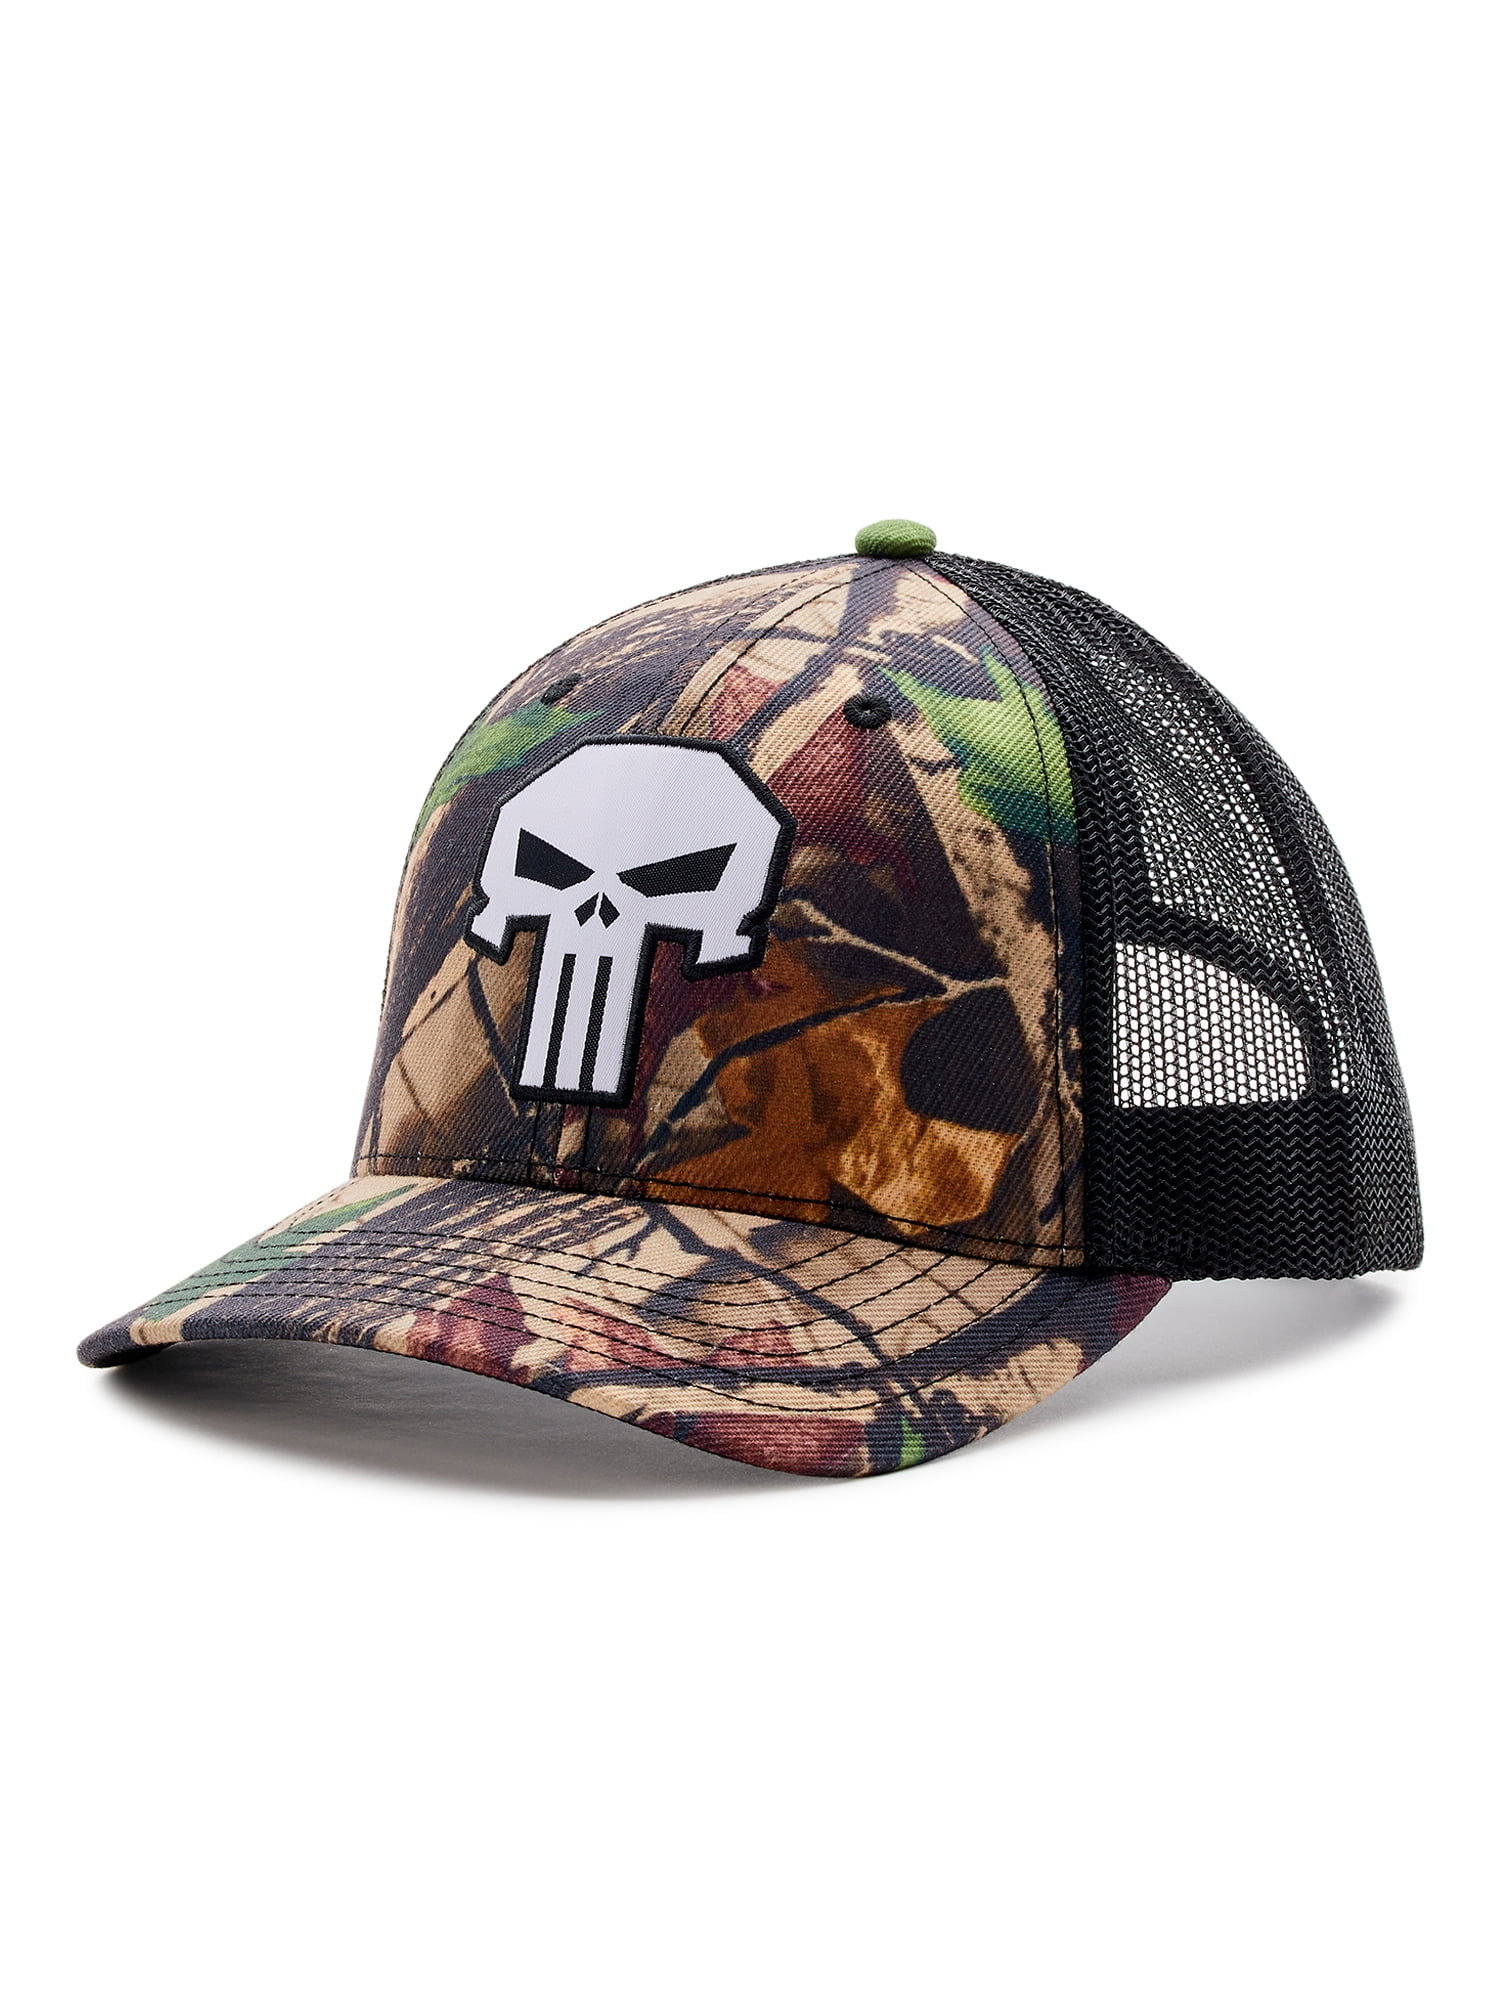 Punisher Men's Adjustable Trucker Hat